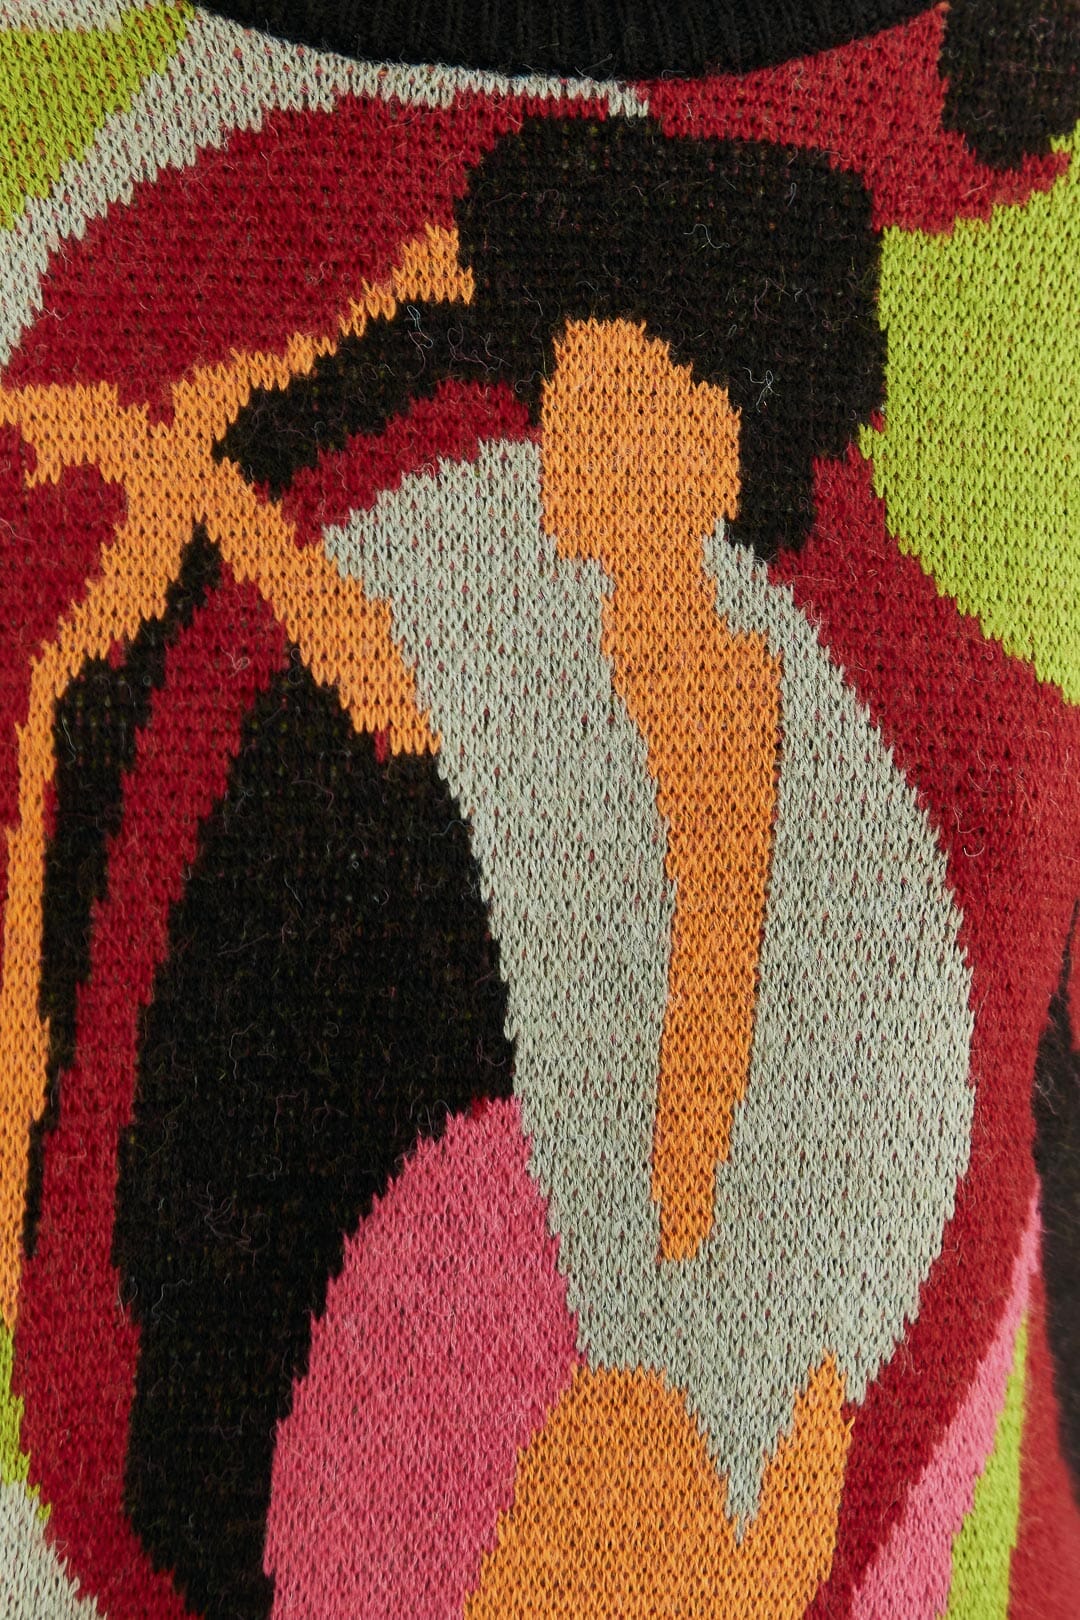 The Multicolor Dance Knit Sweater